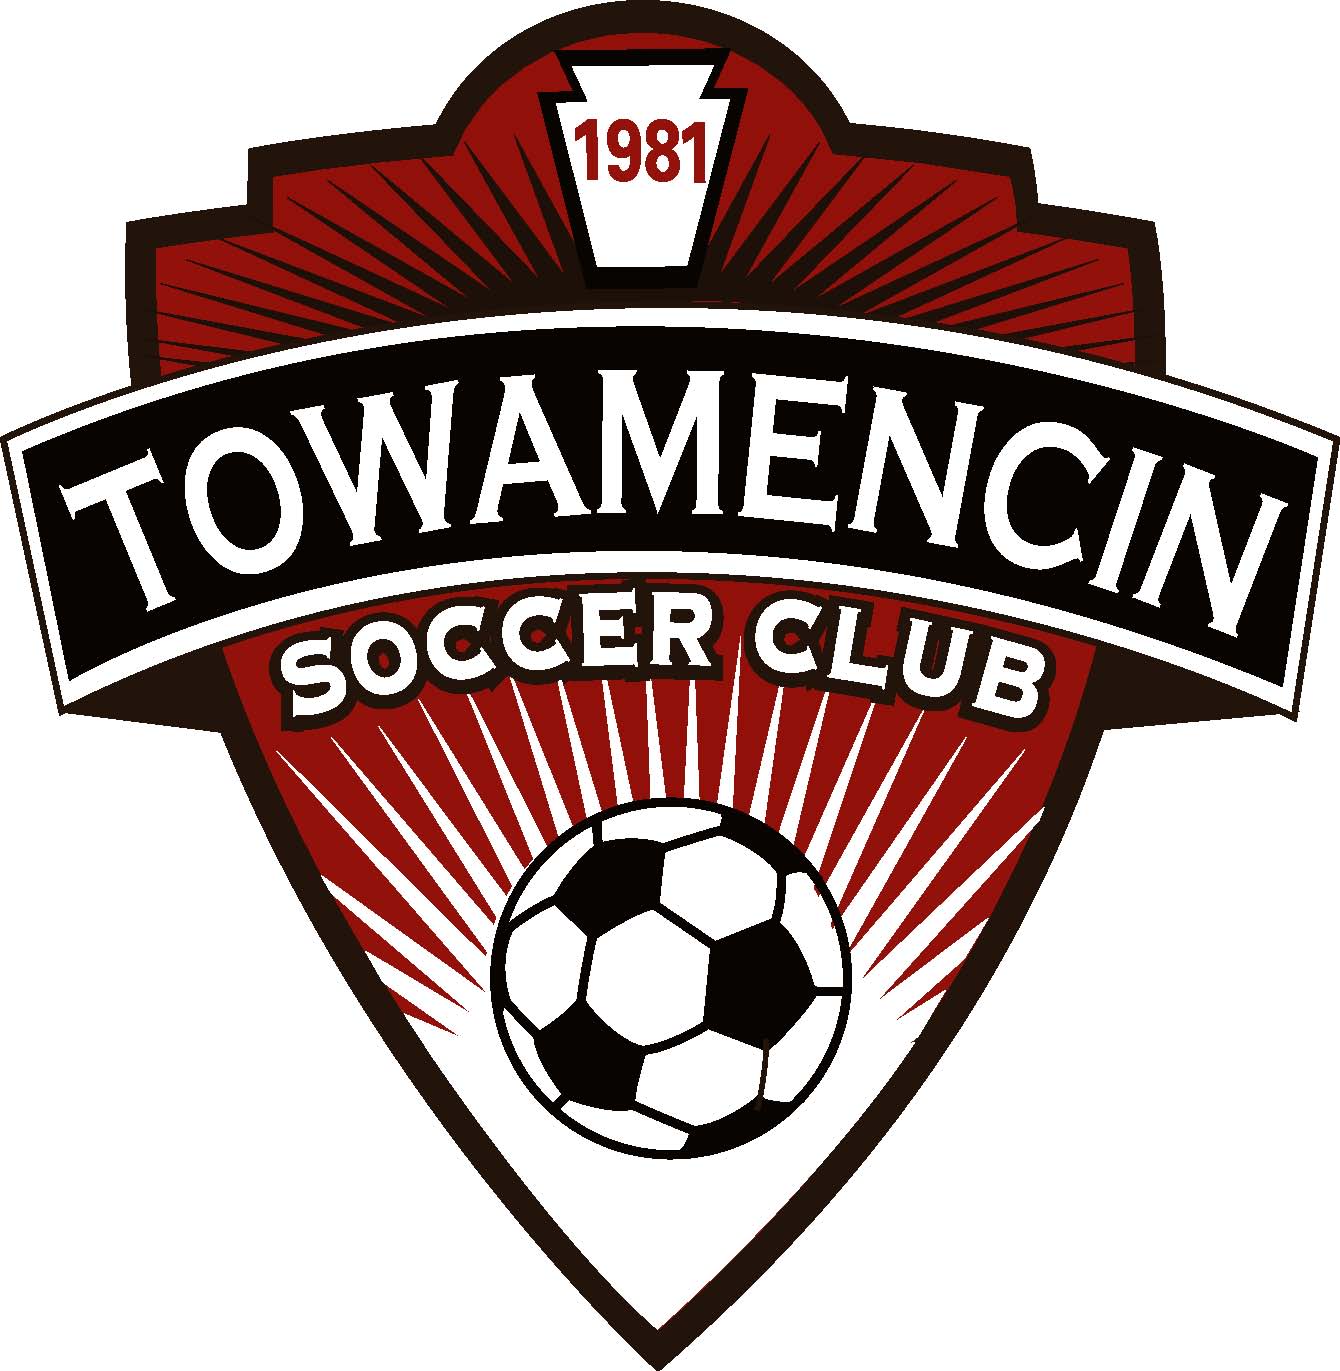 Towamencin Soccer Club (TSC) team badge